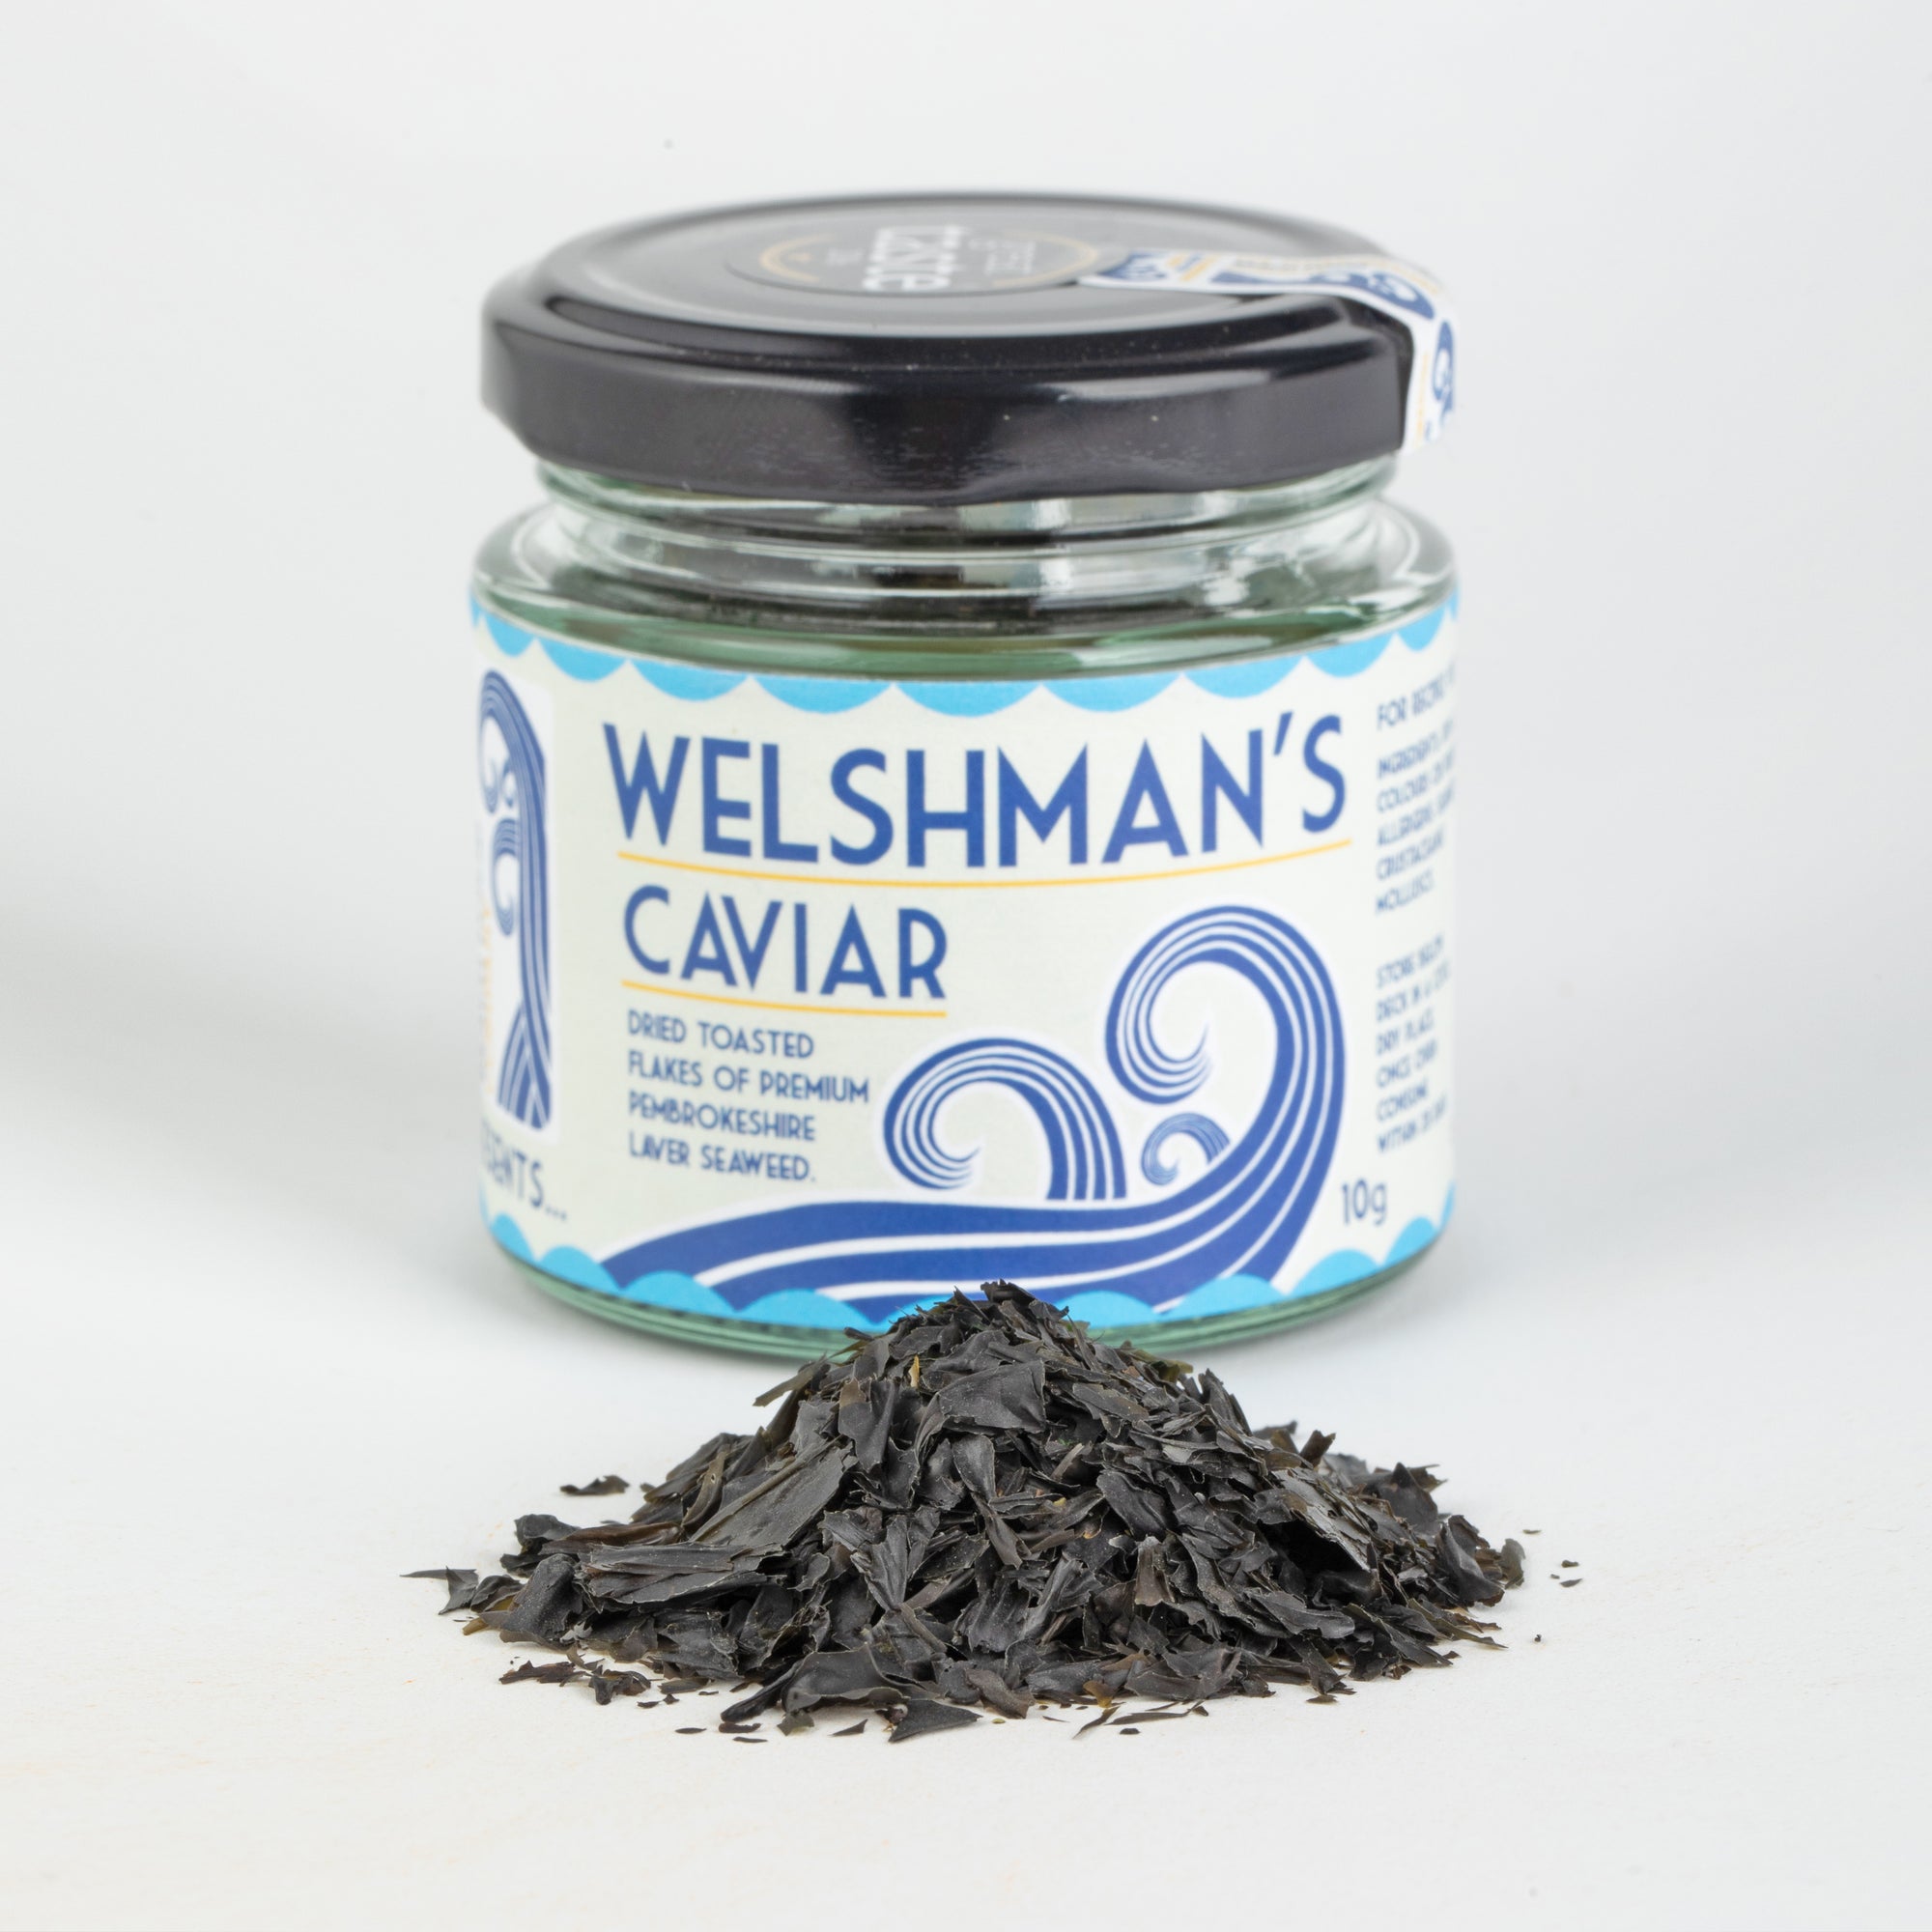 Dried Seaweedss - The Pembrokeshire Beach Food Company